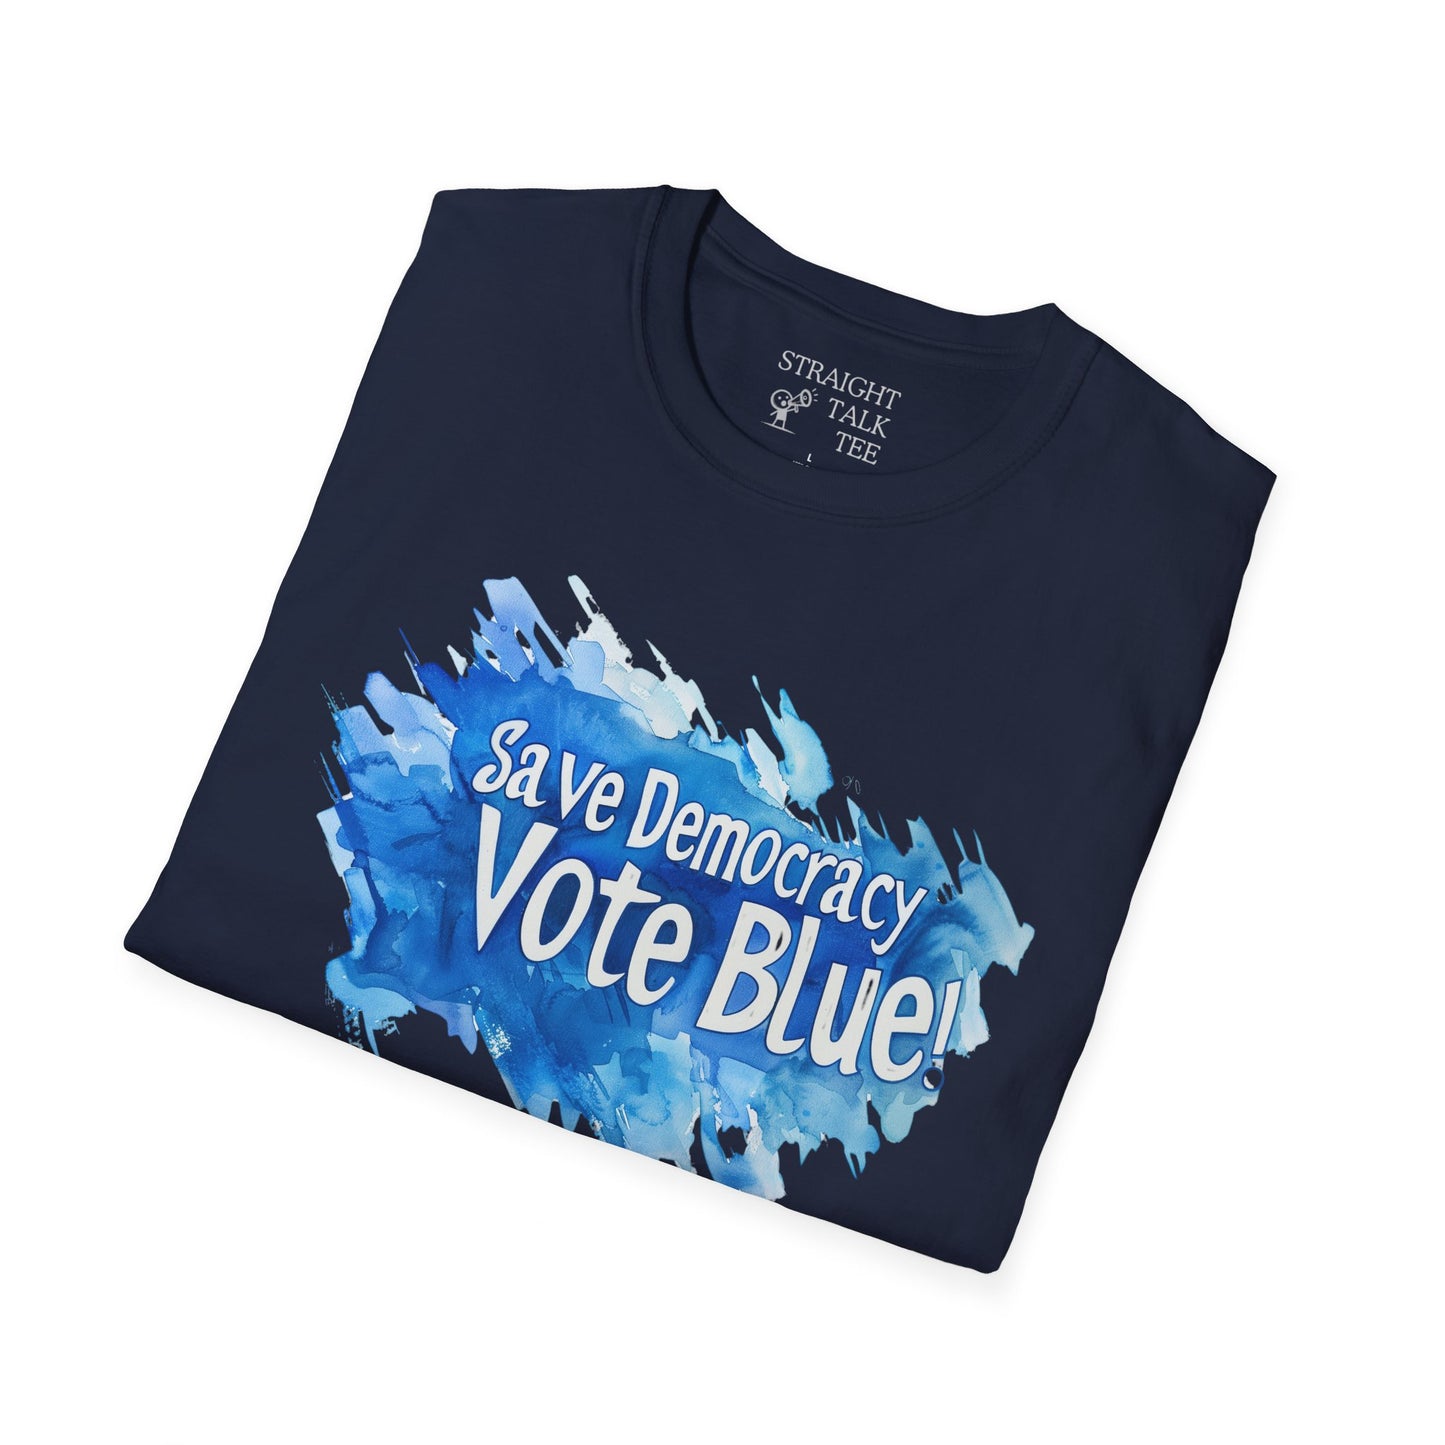 Save Democracy Vote Blue! T-shirt Political Statement Shirt